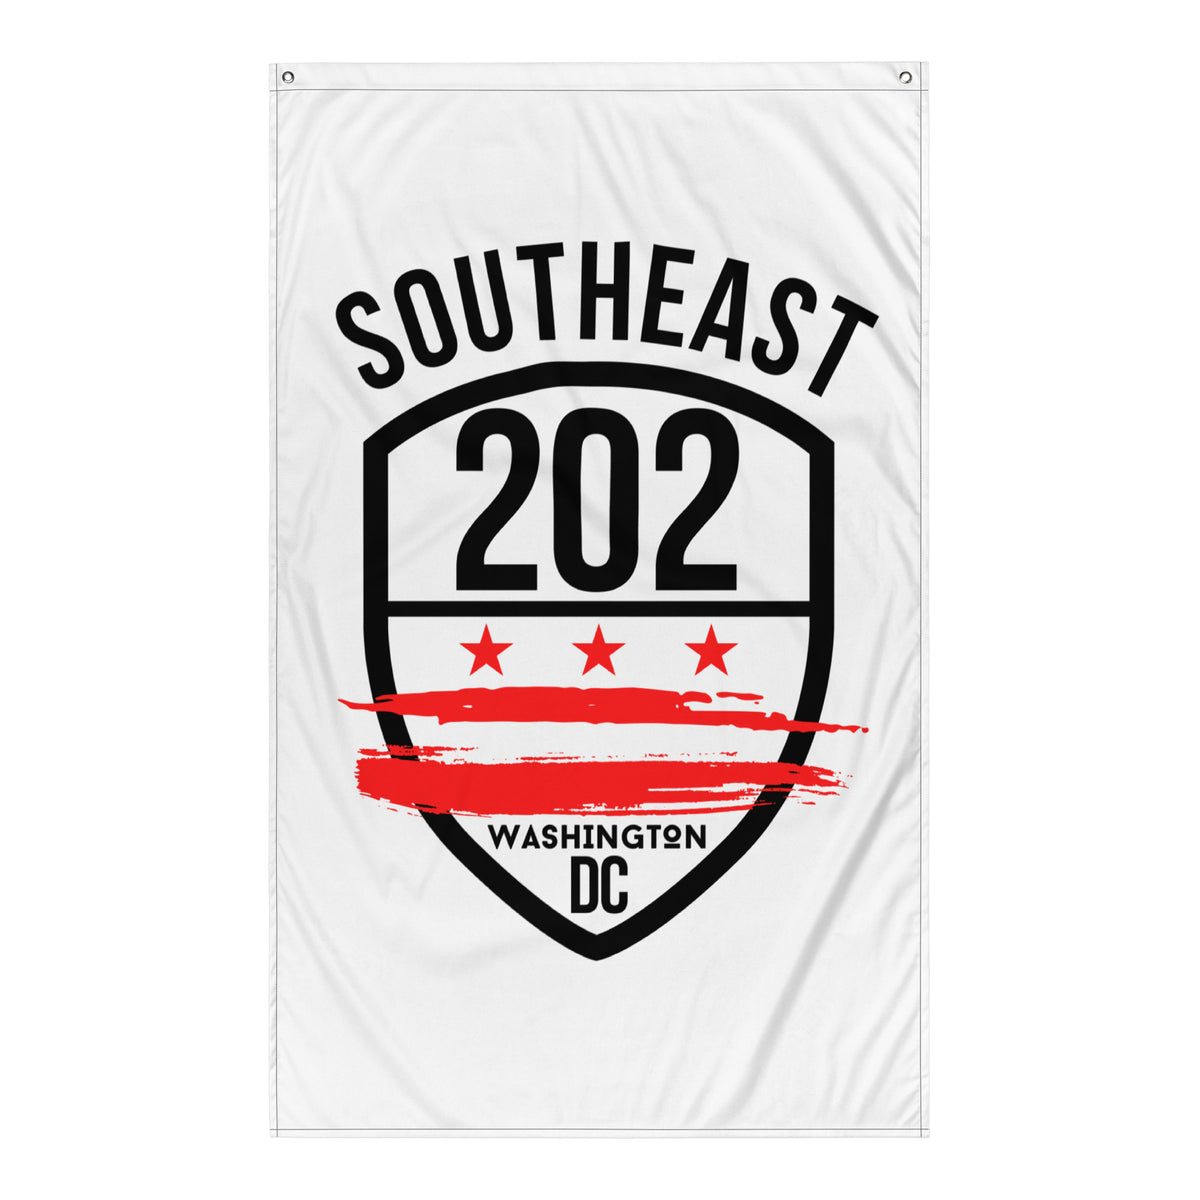 Southeast 202*/DC Emblem Flag